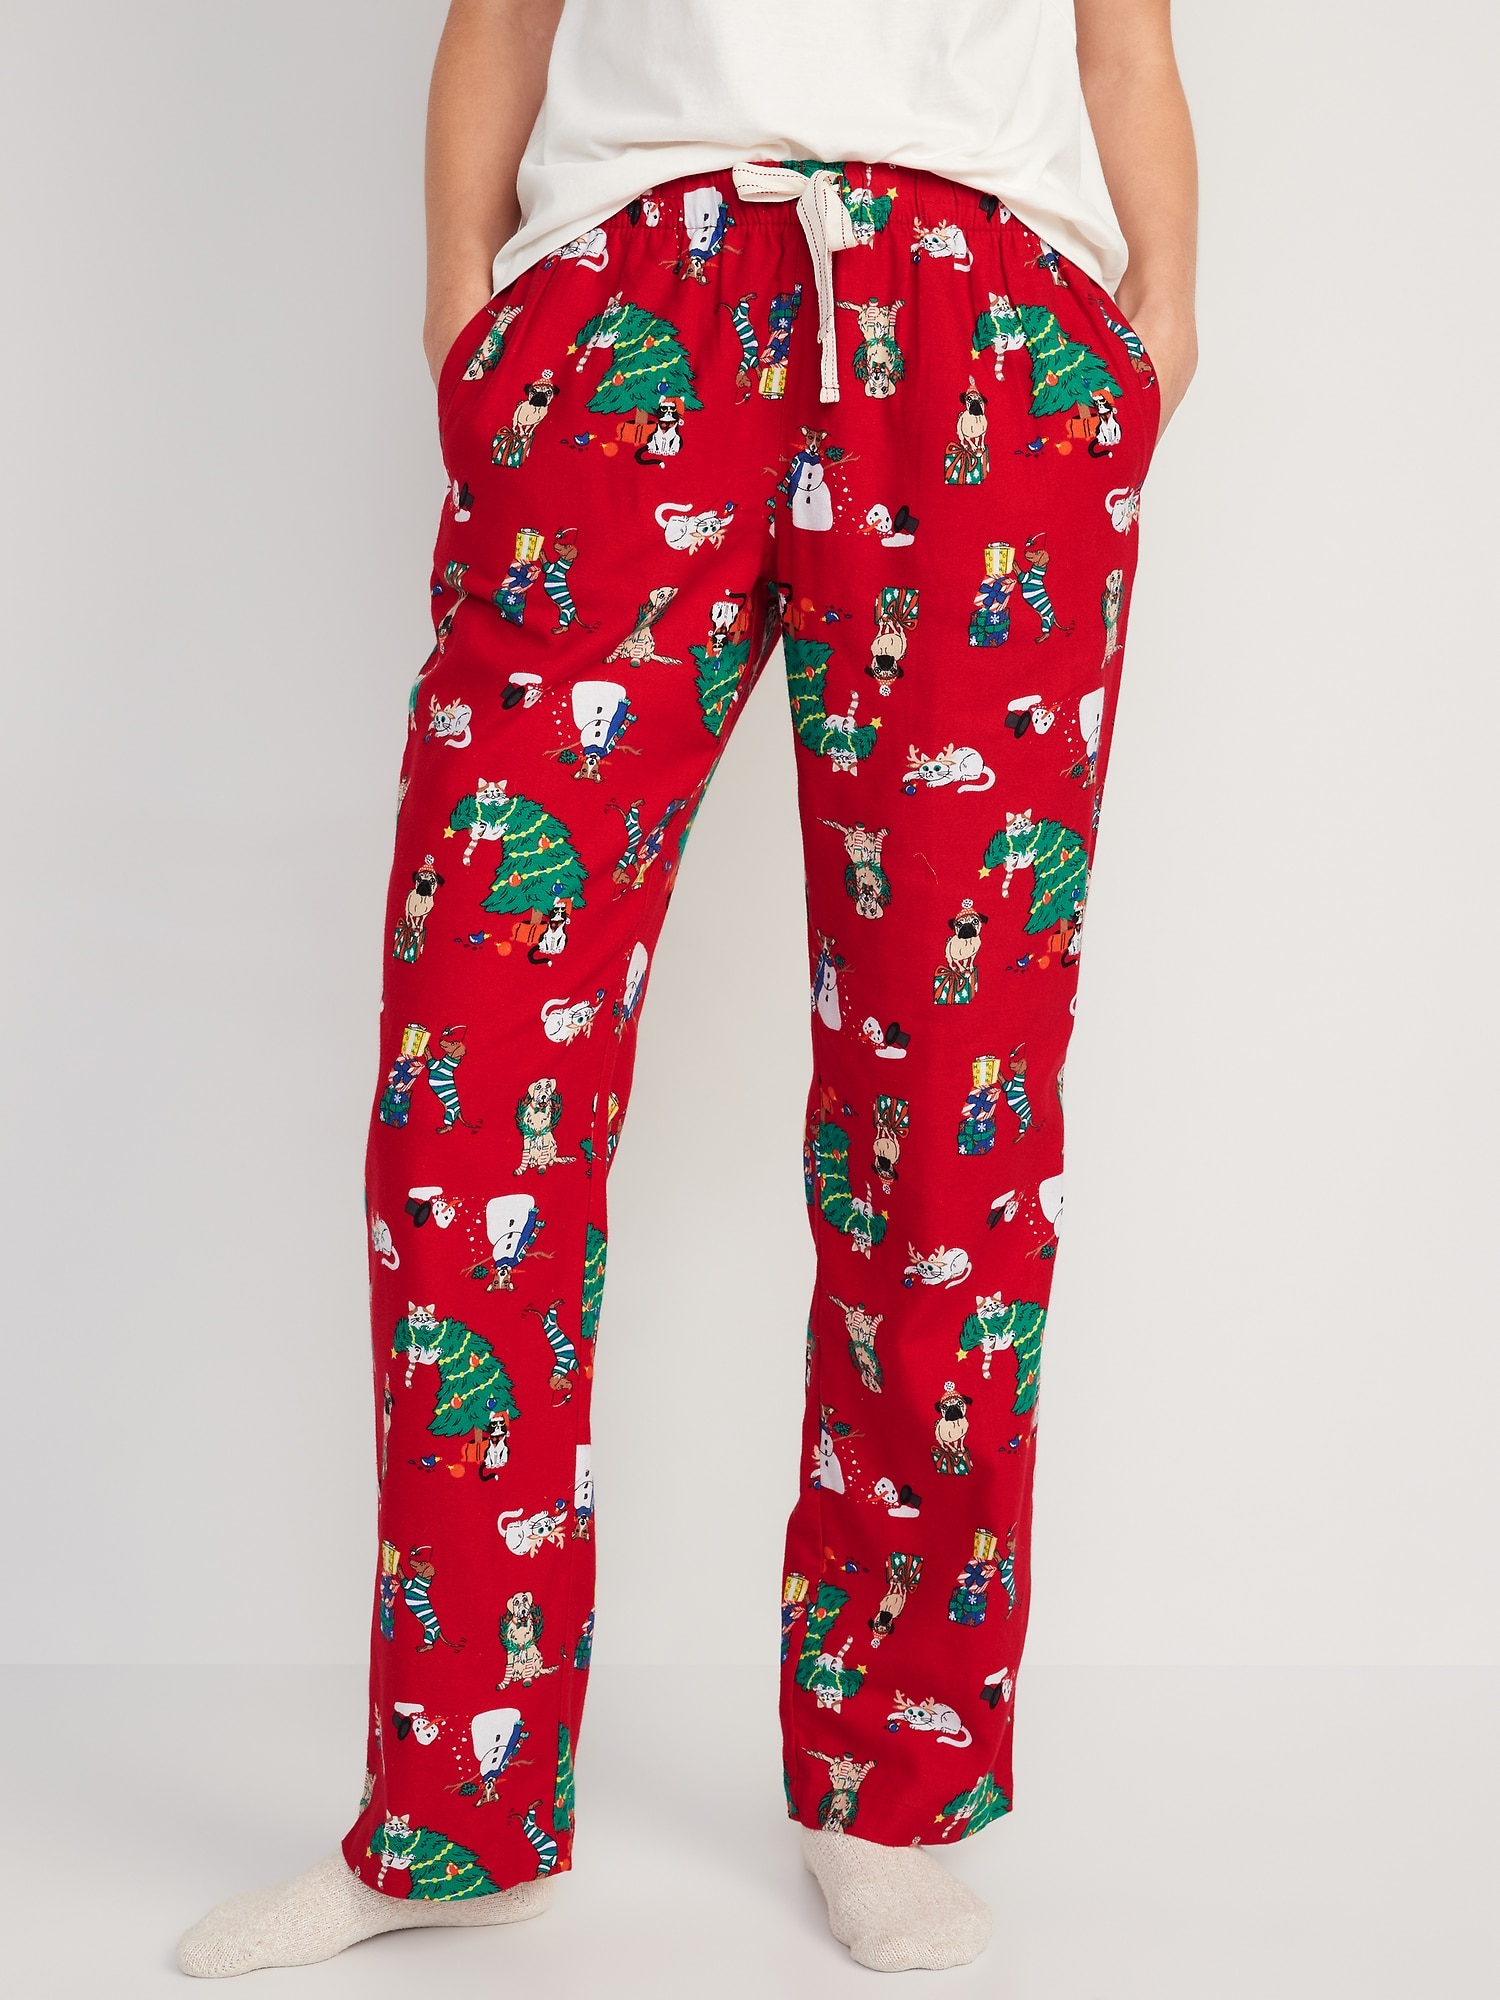 Old Navy, Intimates & Sleepwear, Drawstring Flannel Plaid Pajama Pants  Old Navy Pj Bottoms Size Xs Christmas